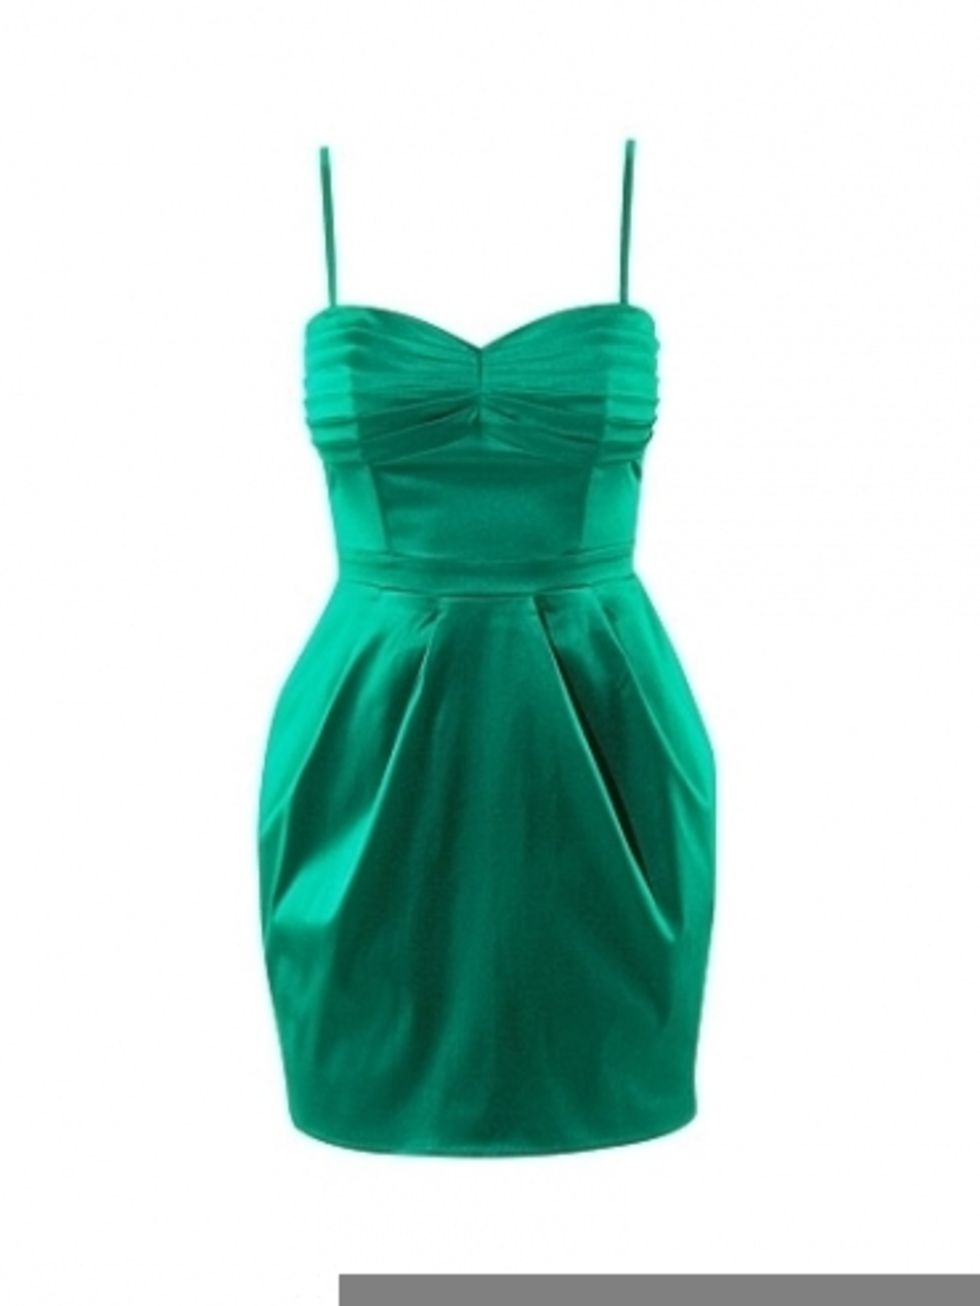 Green, Teal, Aqua, Turquoise, Dress, Azure, Black, Electric blue, One-piece garment, Day dress, 